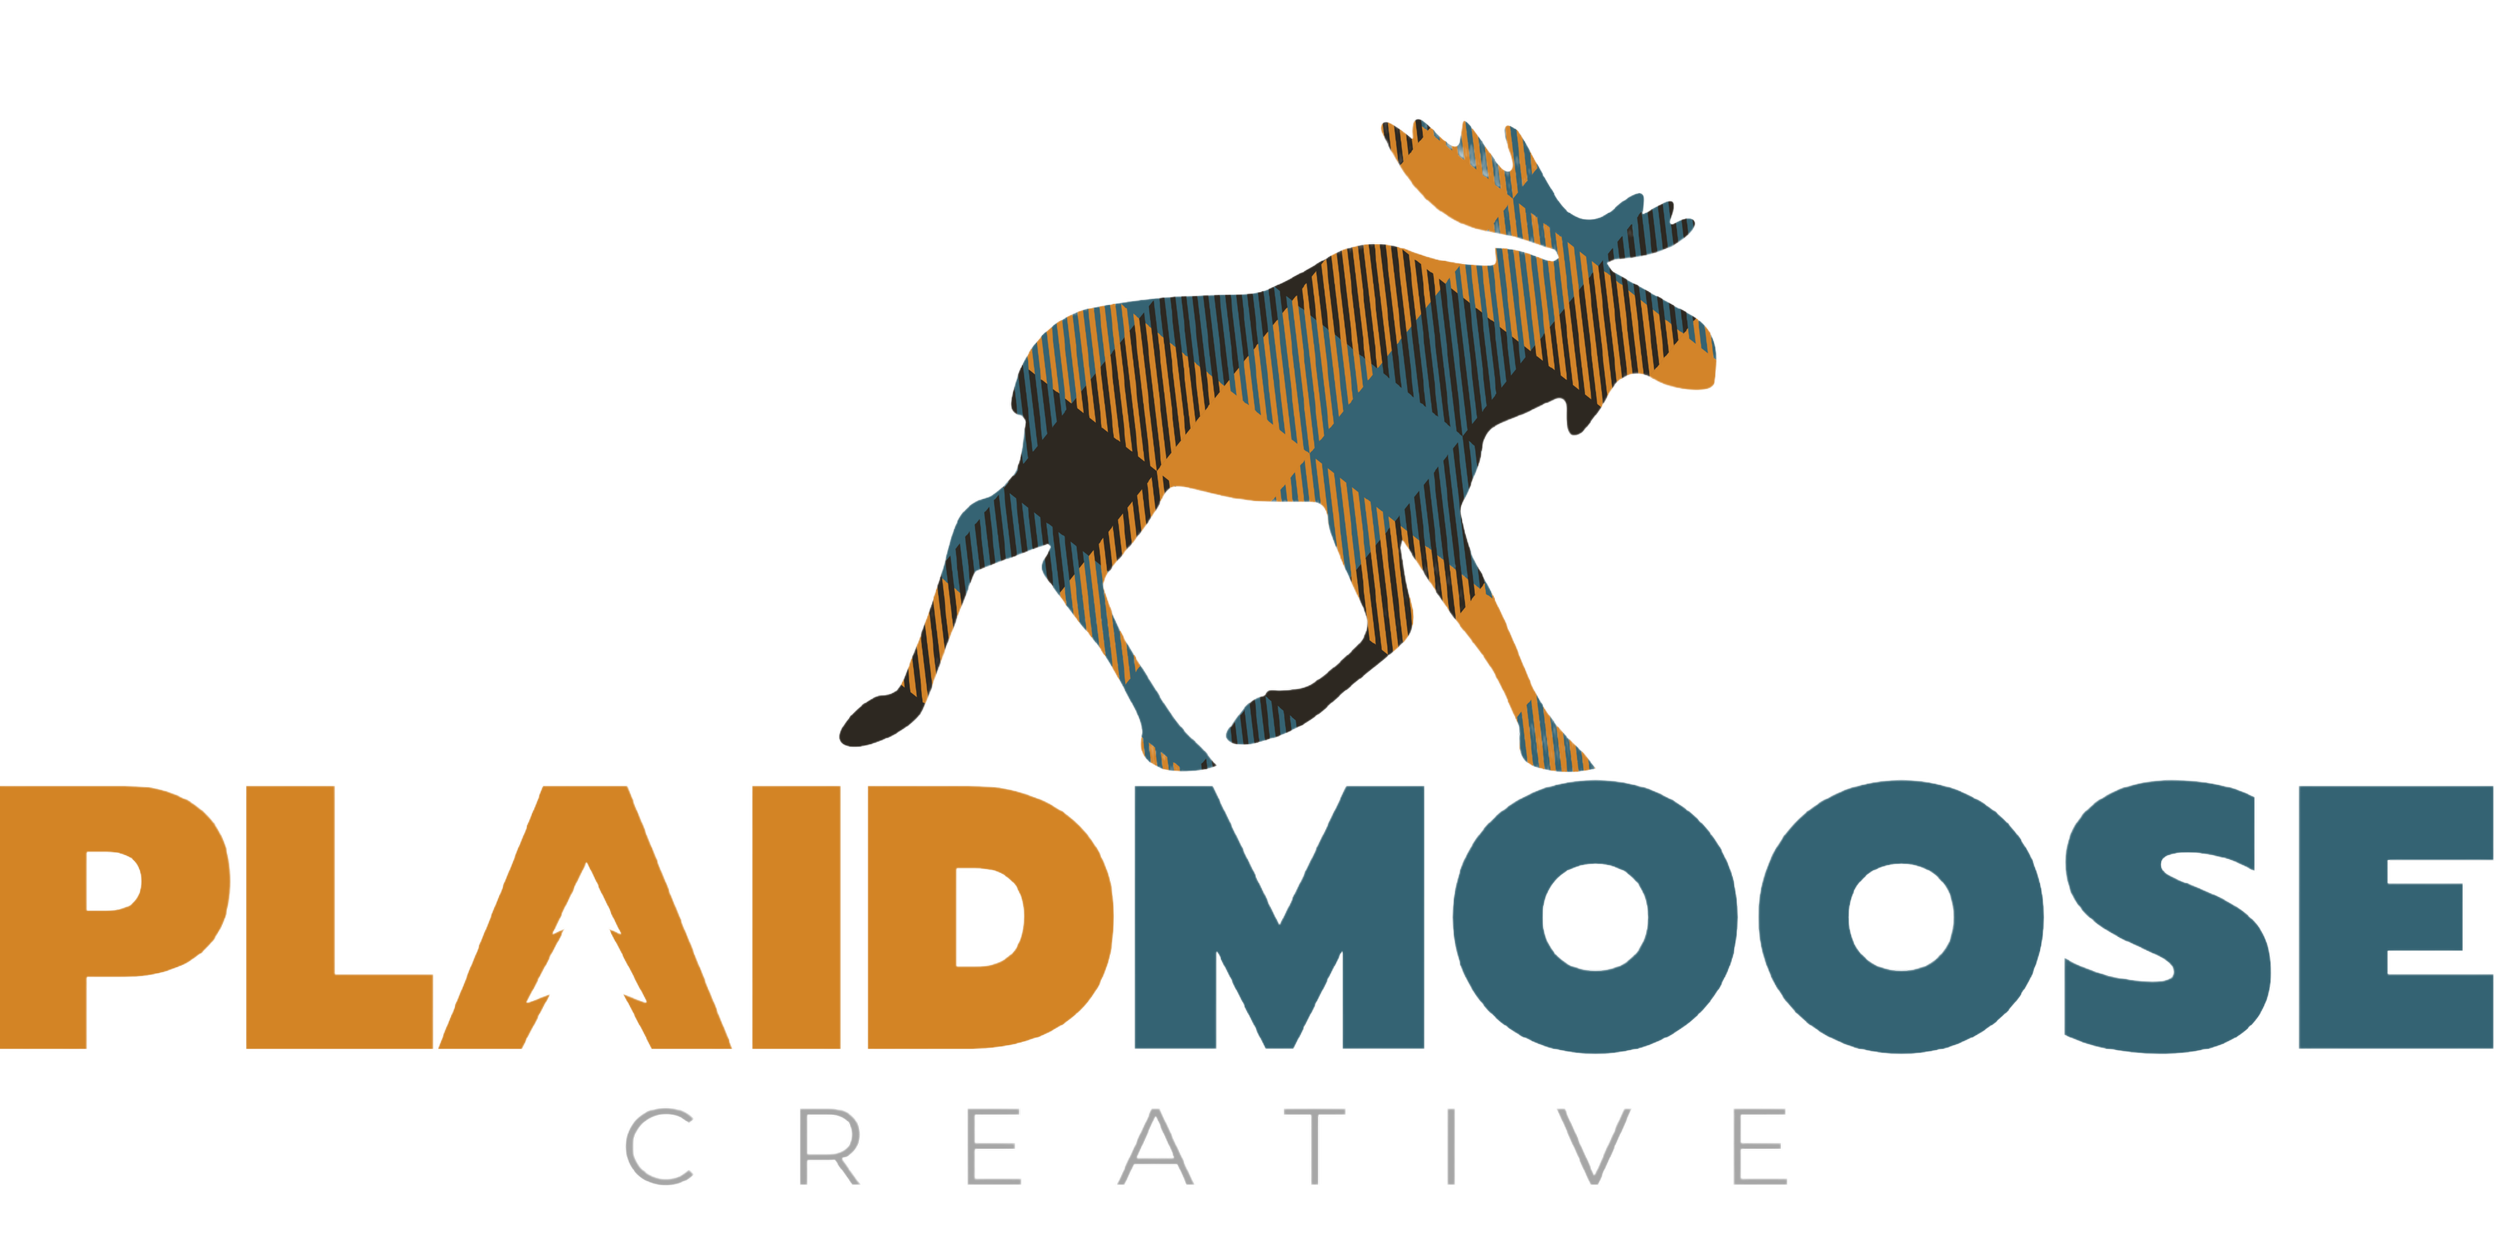 Plaid-moose-creative-logo-agency-transparent_high.png